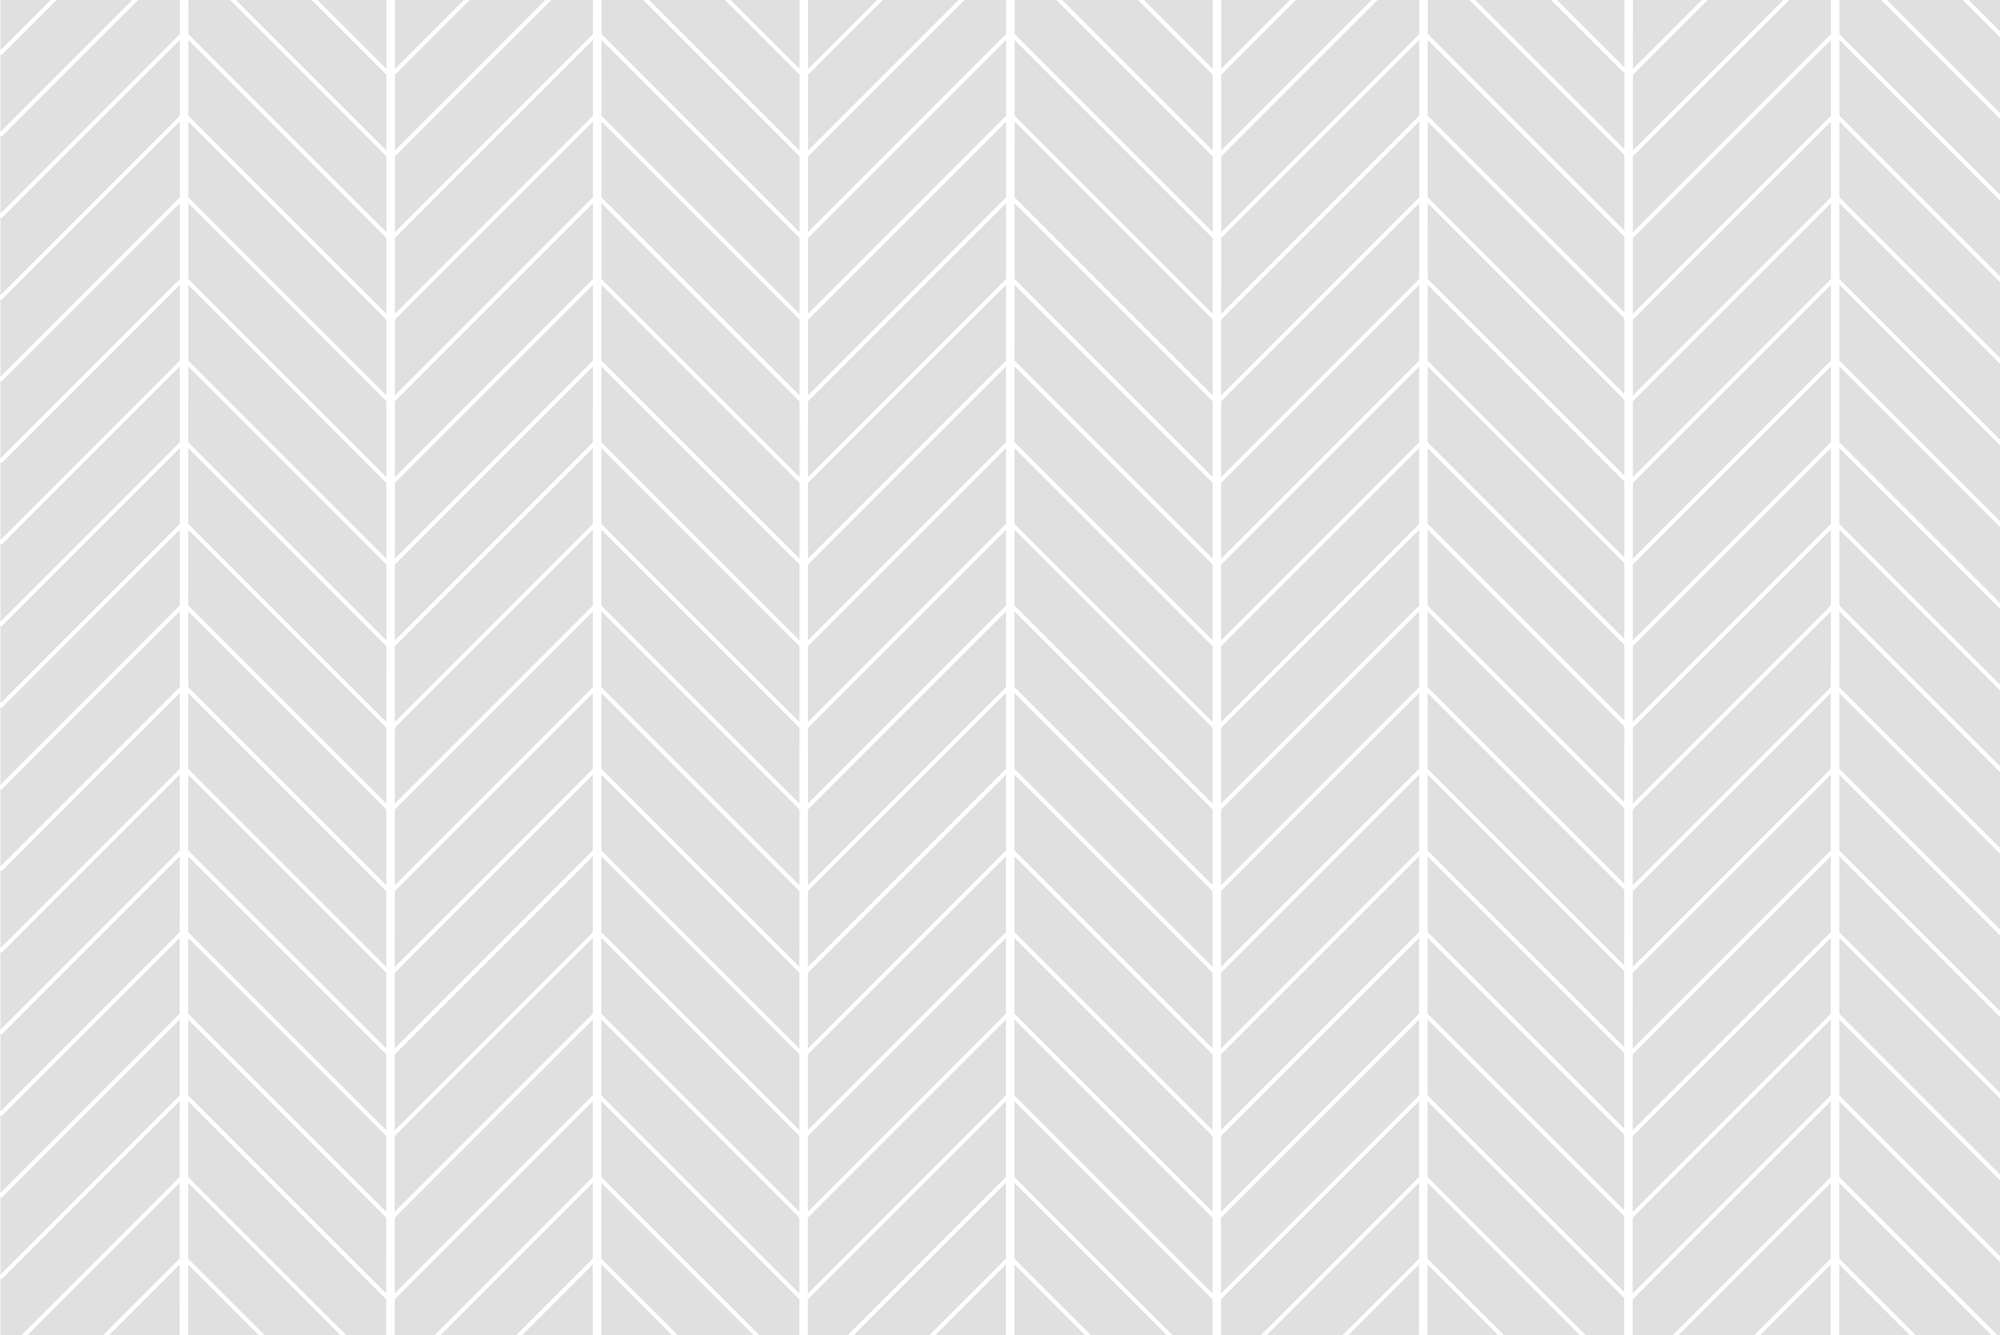             Design wallpaper jagged wave pattern grey on matt smooth non-woven
        